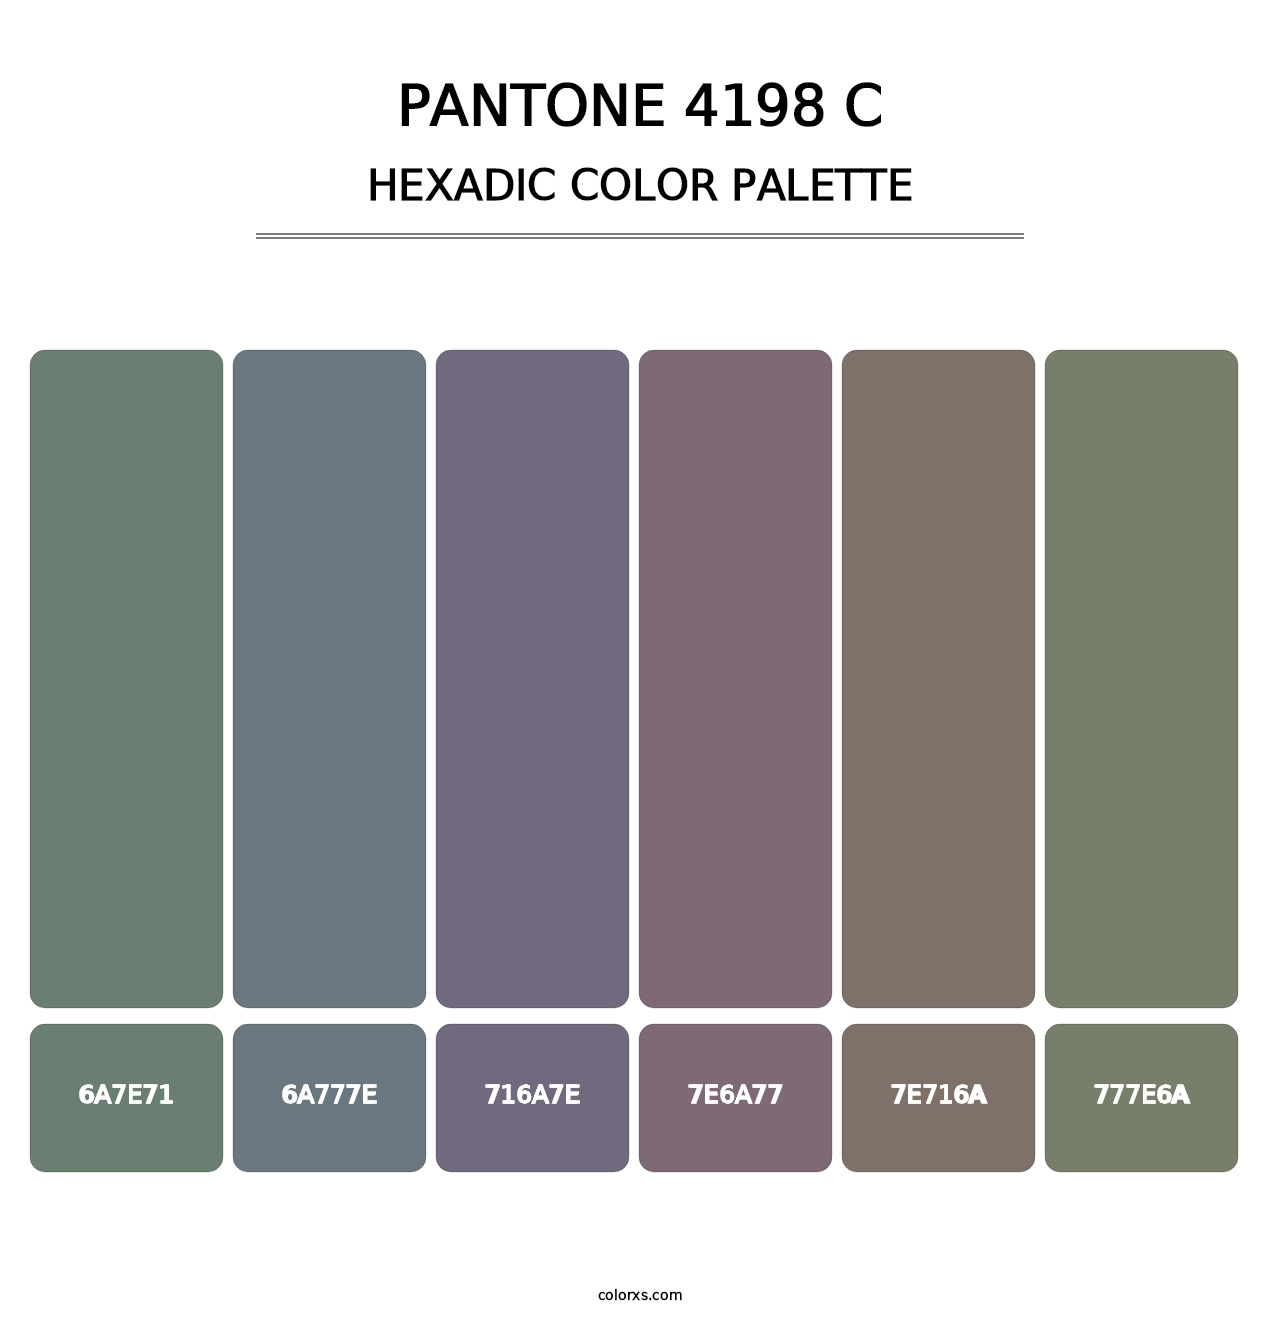 PANTONE 4198 C - Hexadic Color Palette